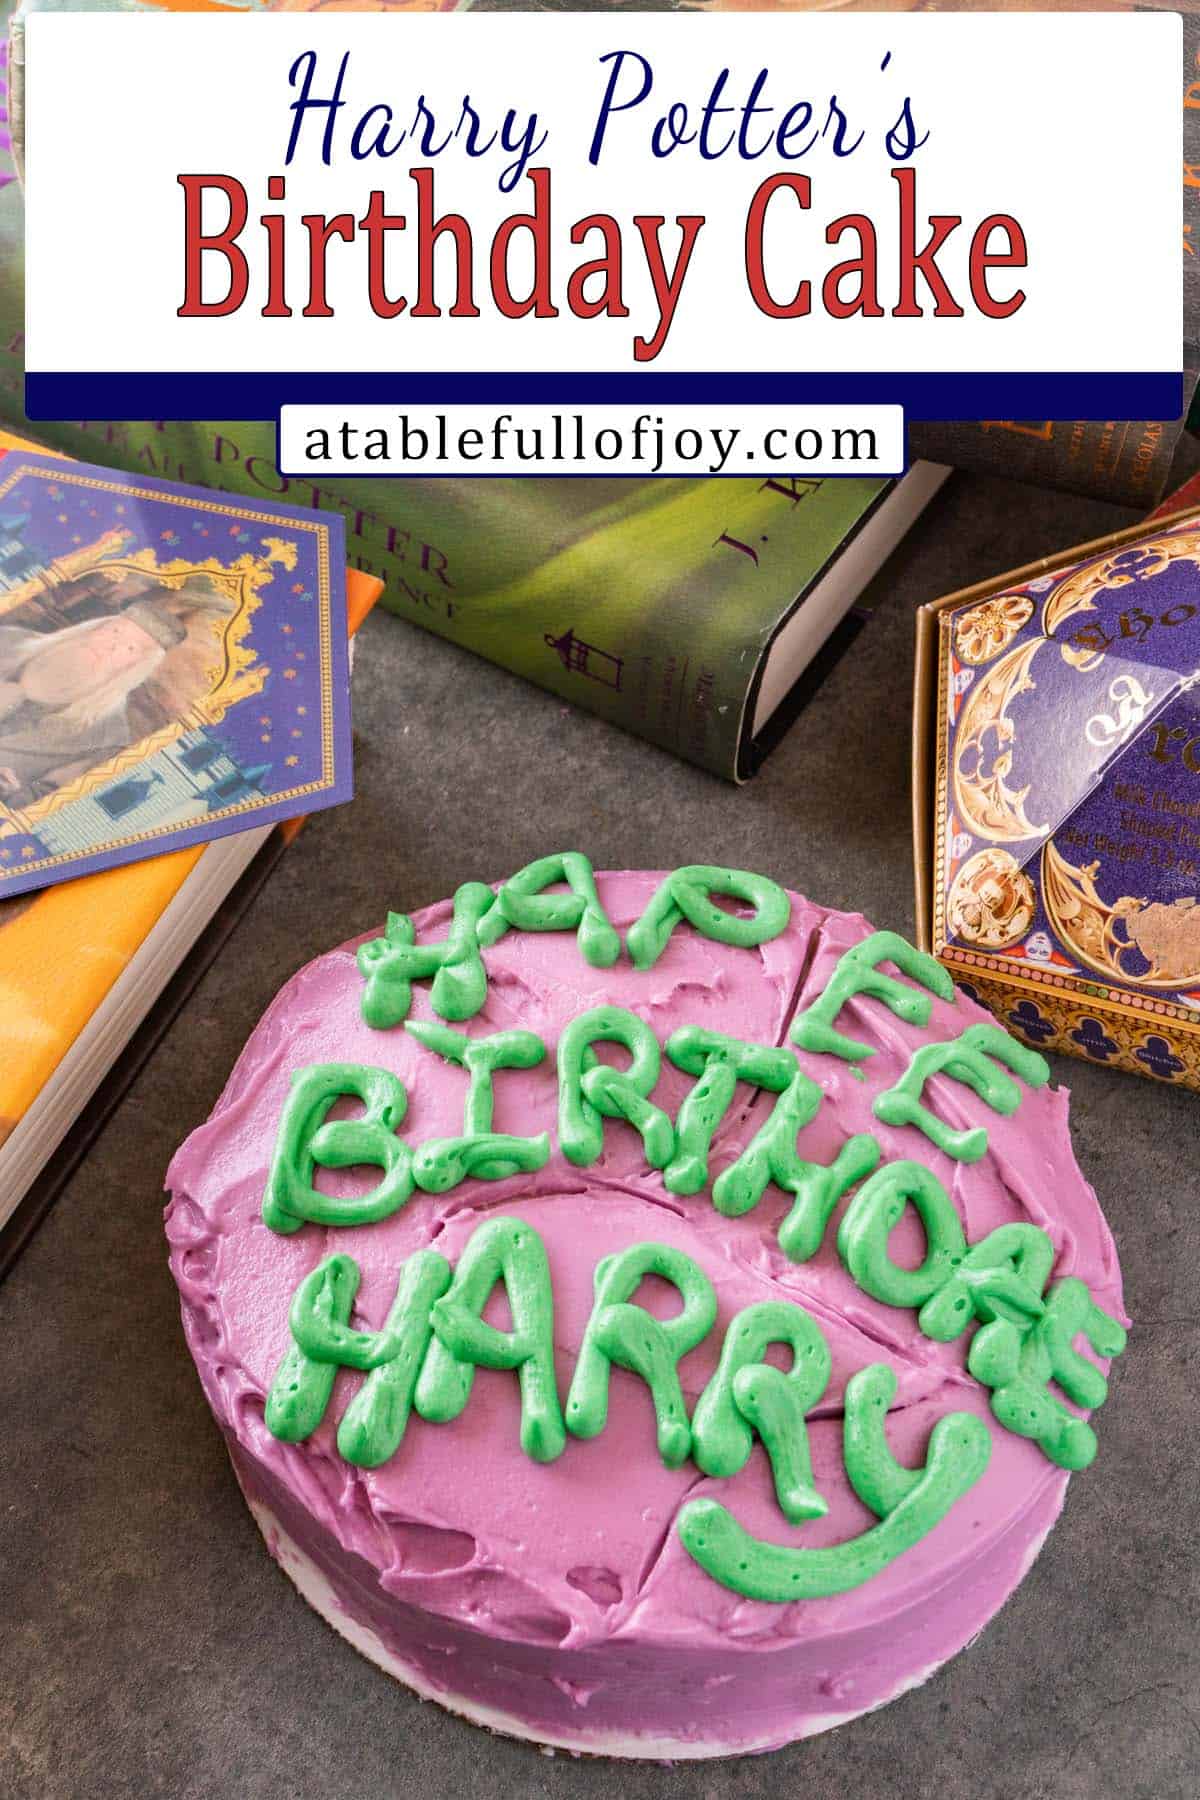 harry potter birthday cake Pinterest pin